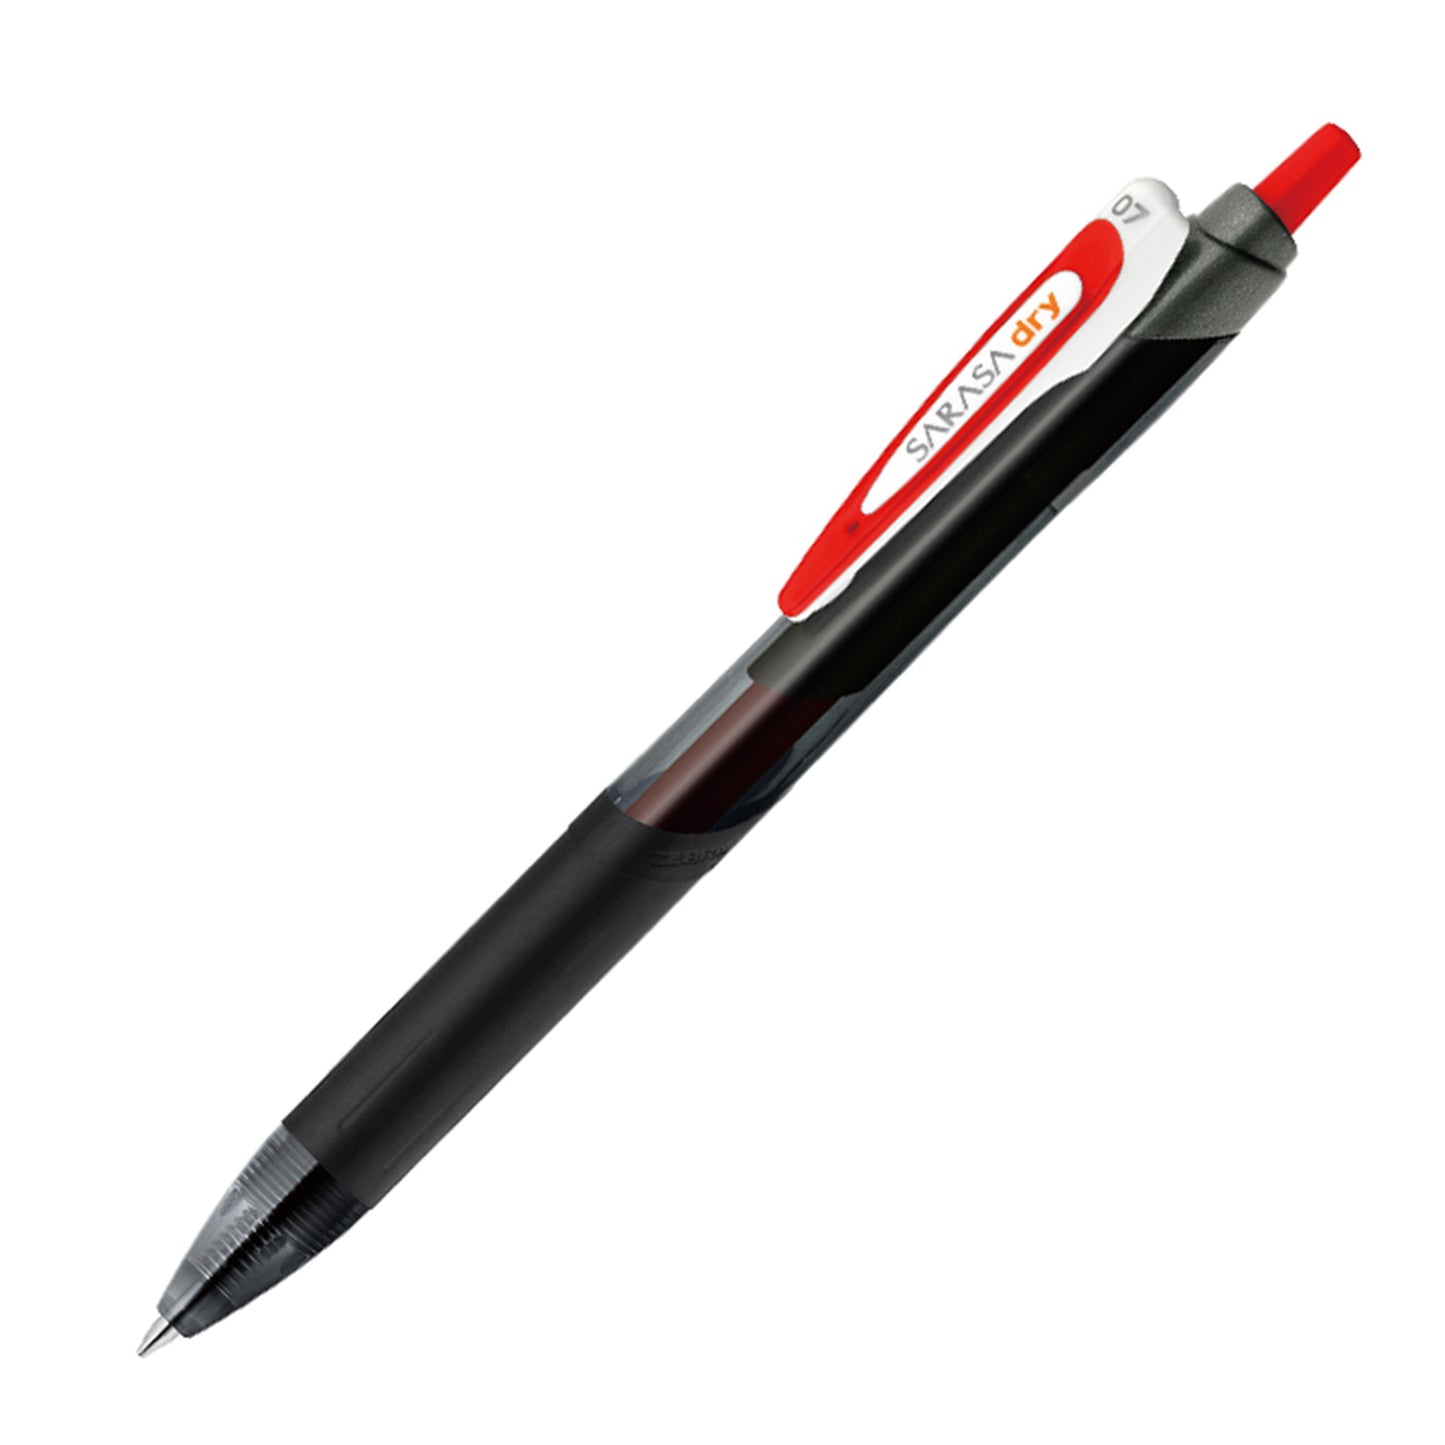 Sarasa Dry 0.7mm Gel Ink Ballpoint Pen / Zebra